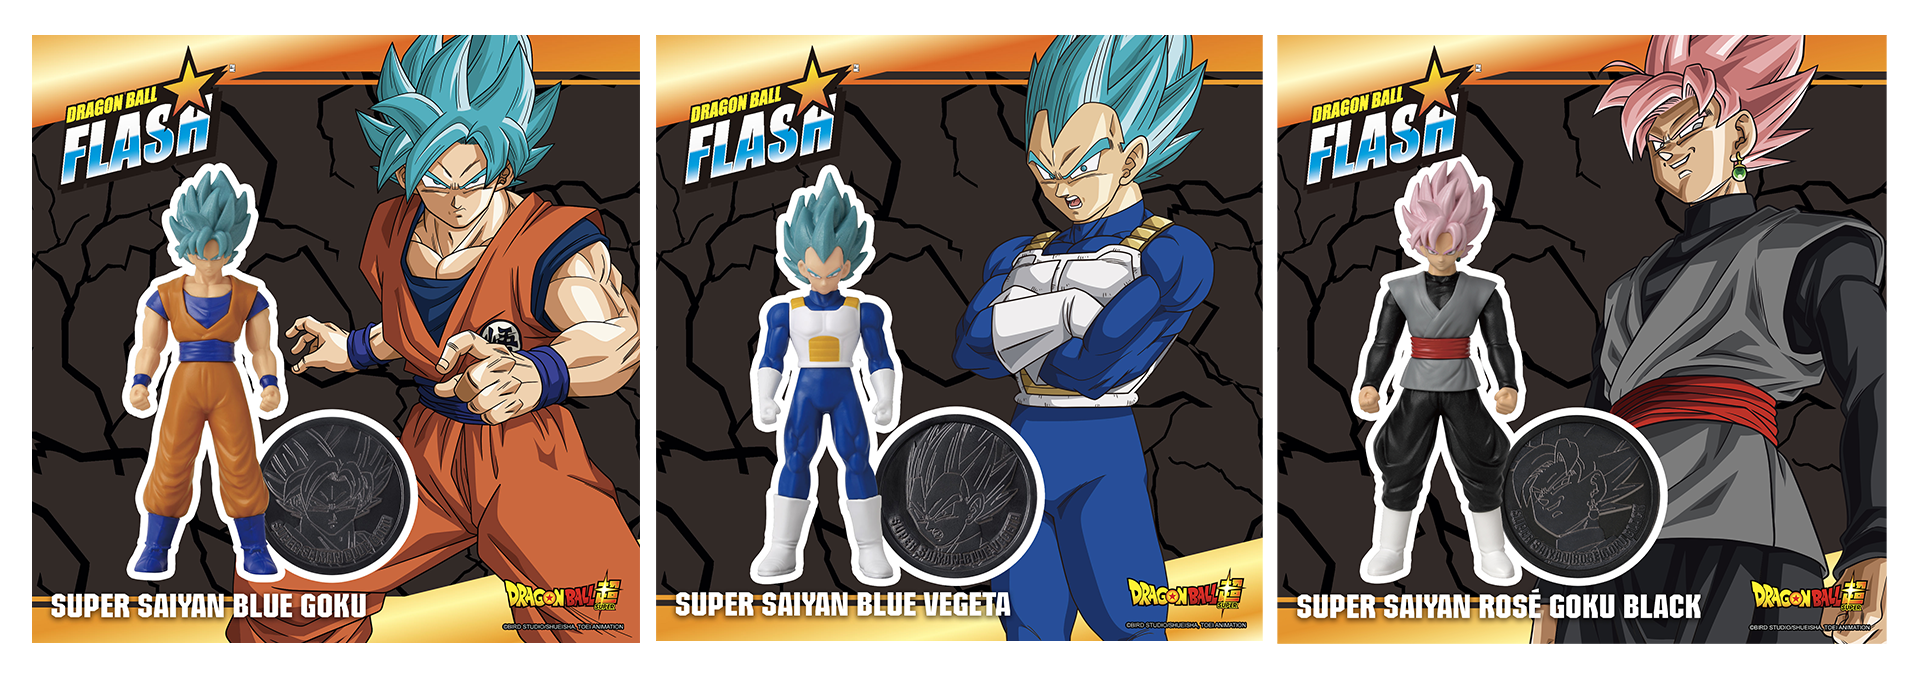 DBZ: Super Saiyan 4 Goku & Super Saiyan Blue Goku Just Fought